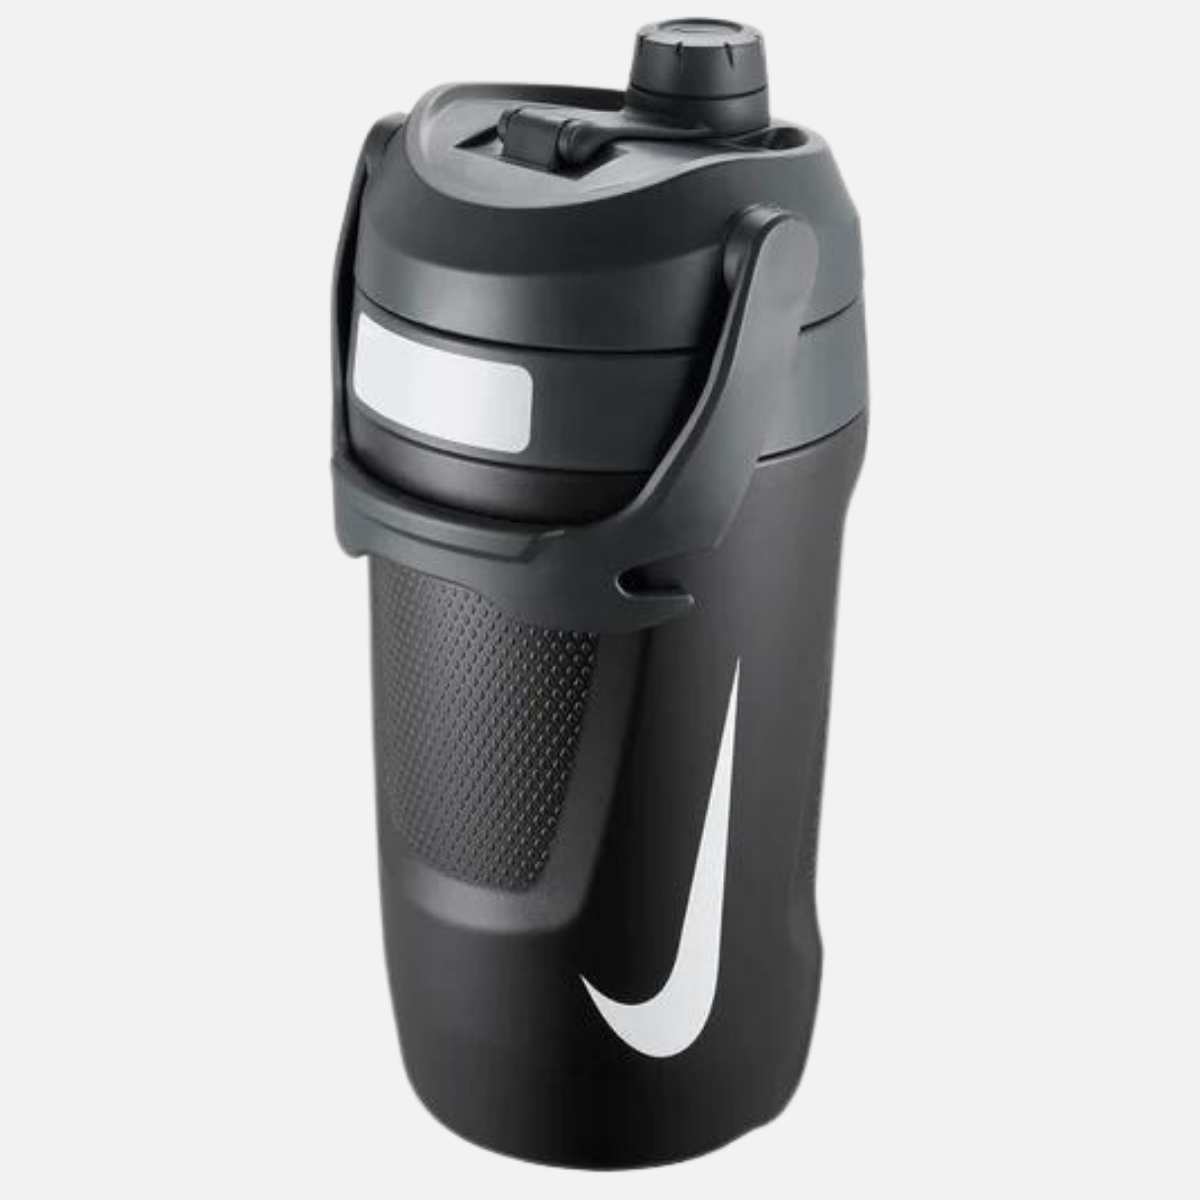 Nike Fuel Jug 40 oz Chug Bottle, Black